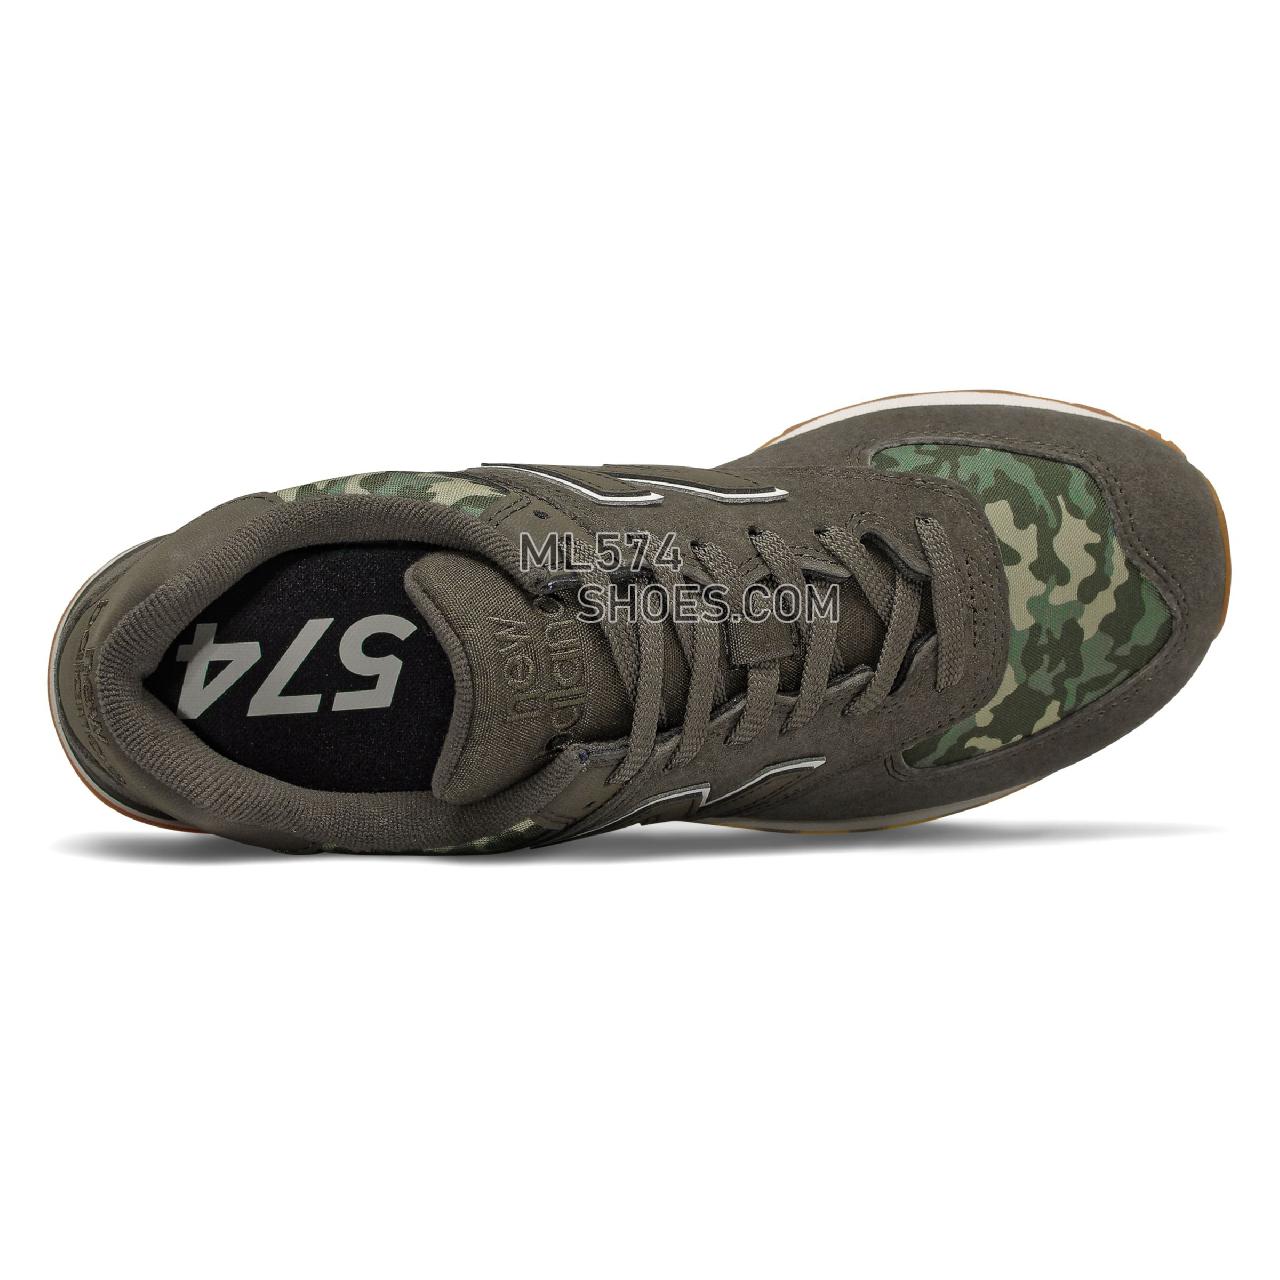 New Balance 574 - Men's Classic Sneakers - Black Olive with Moonbeam - ML574COB